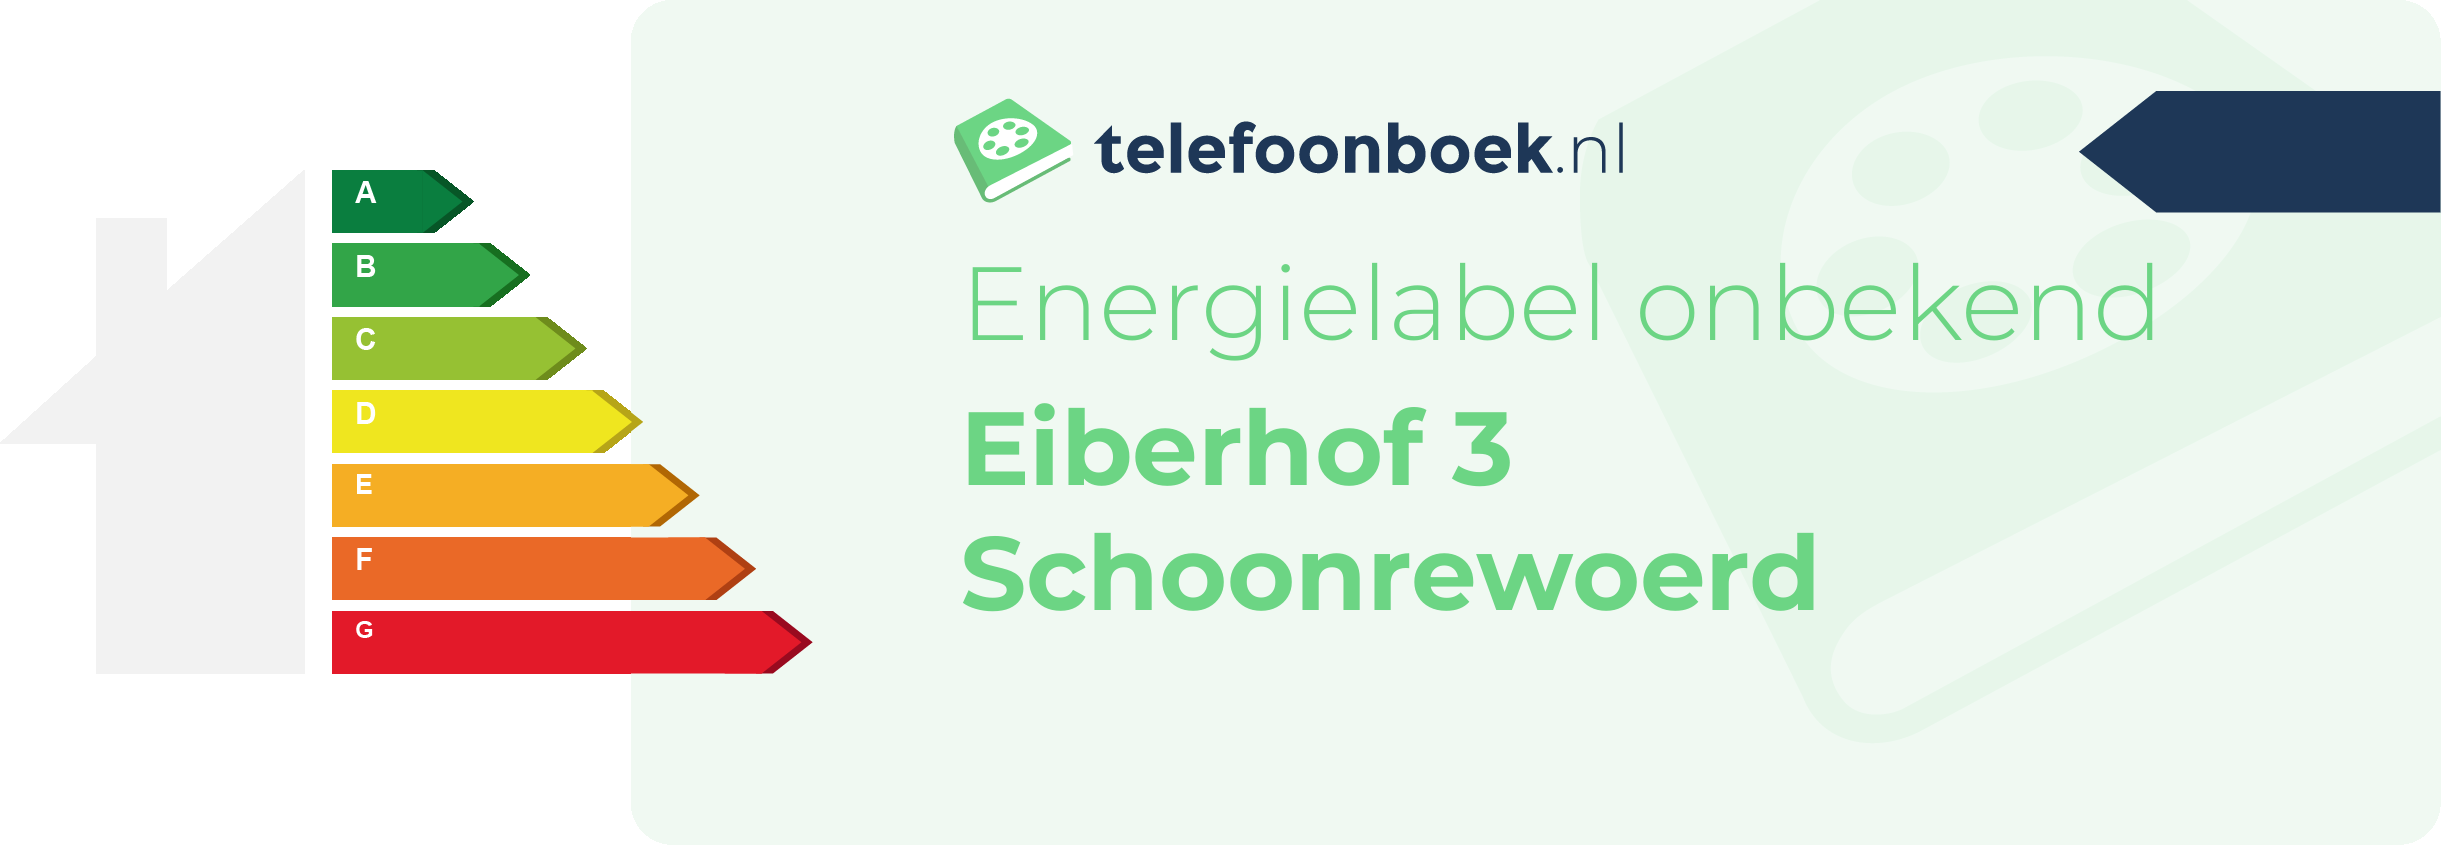 Energielabel Eiberhof 3 Schoonrewoerd